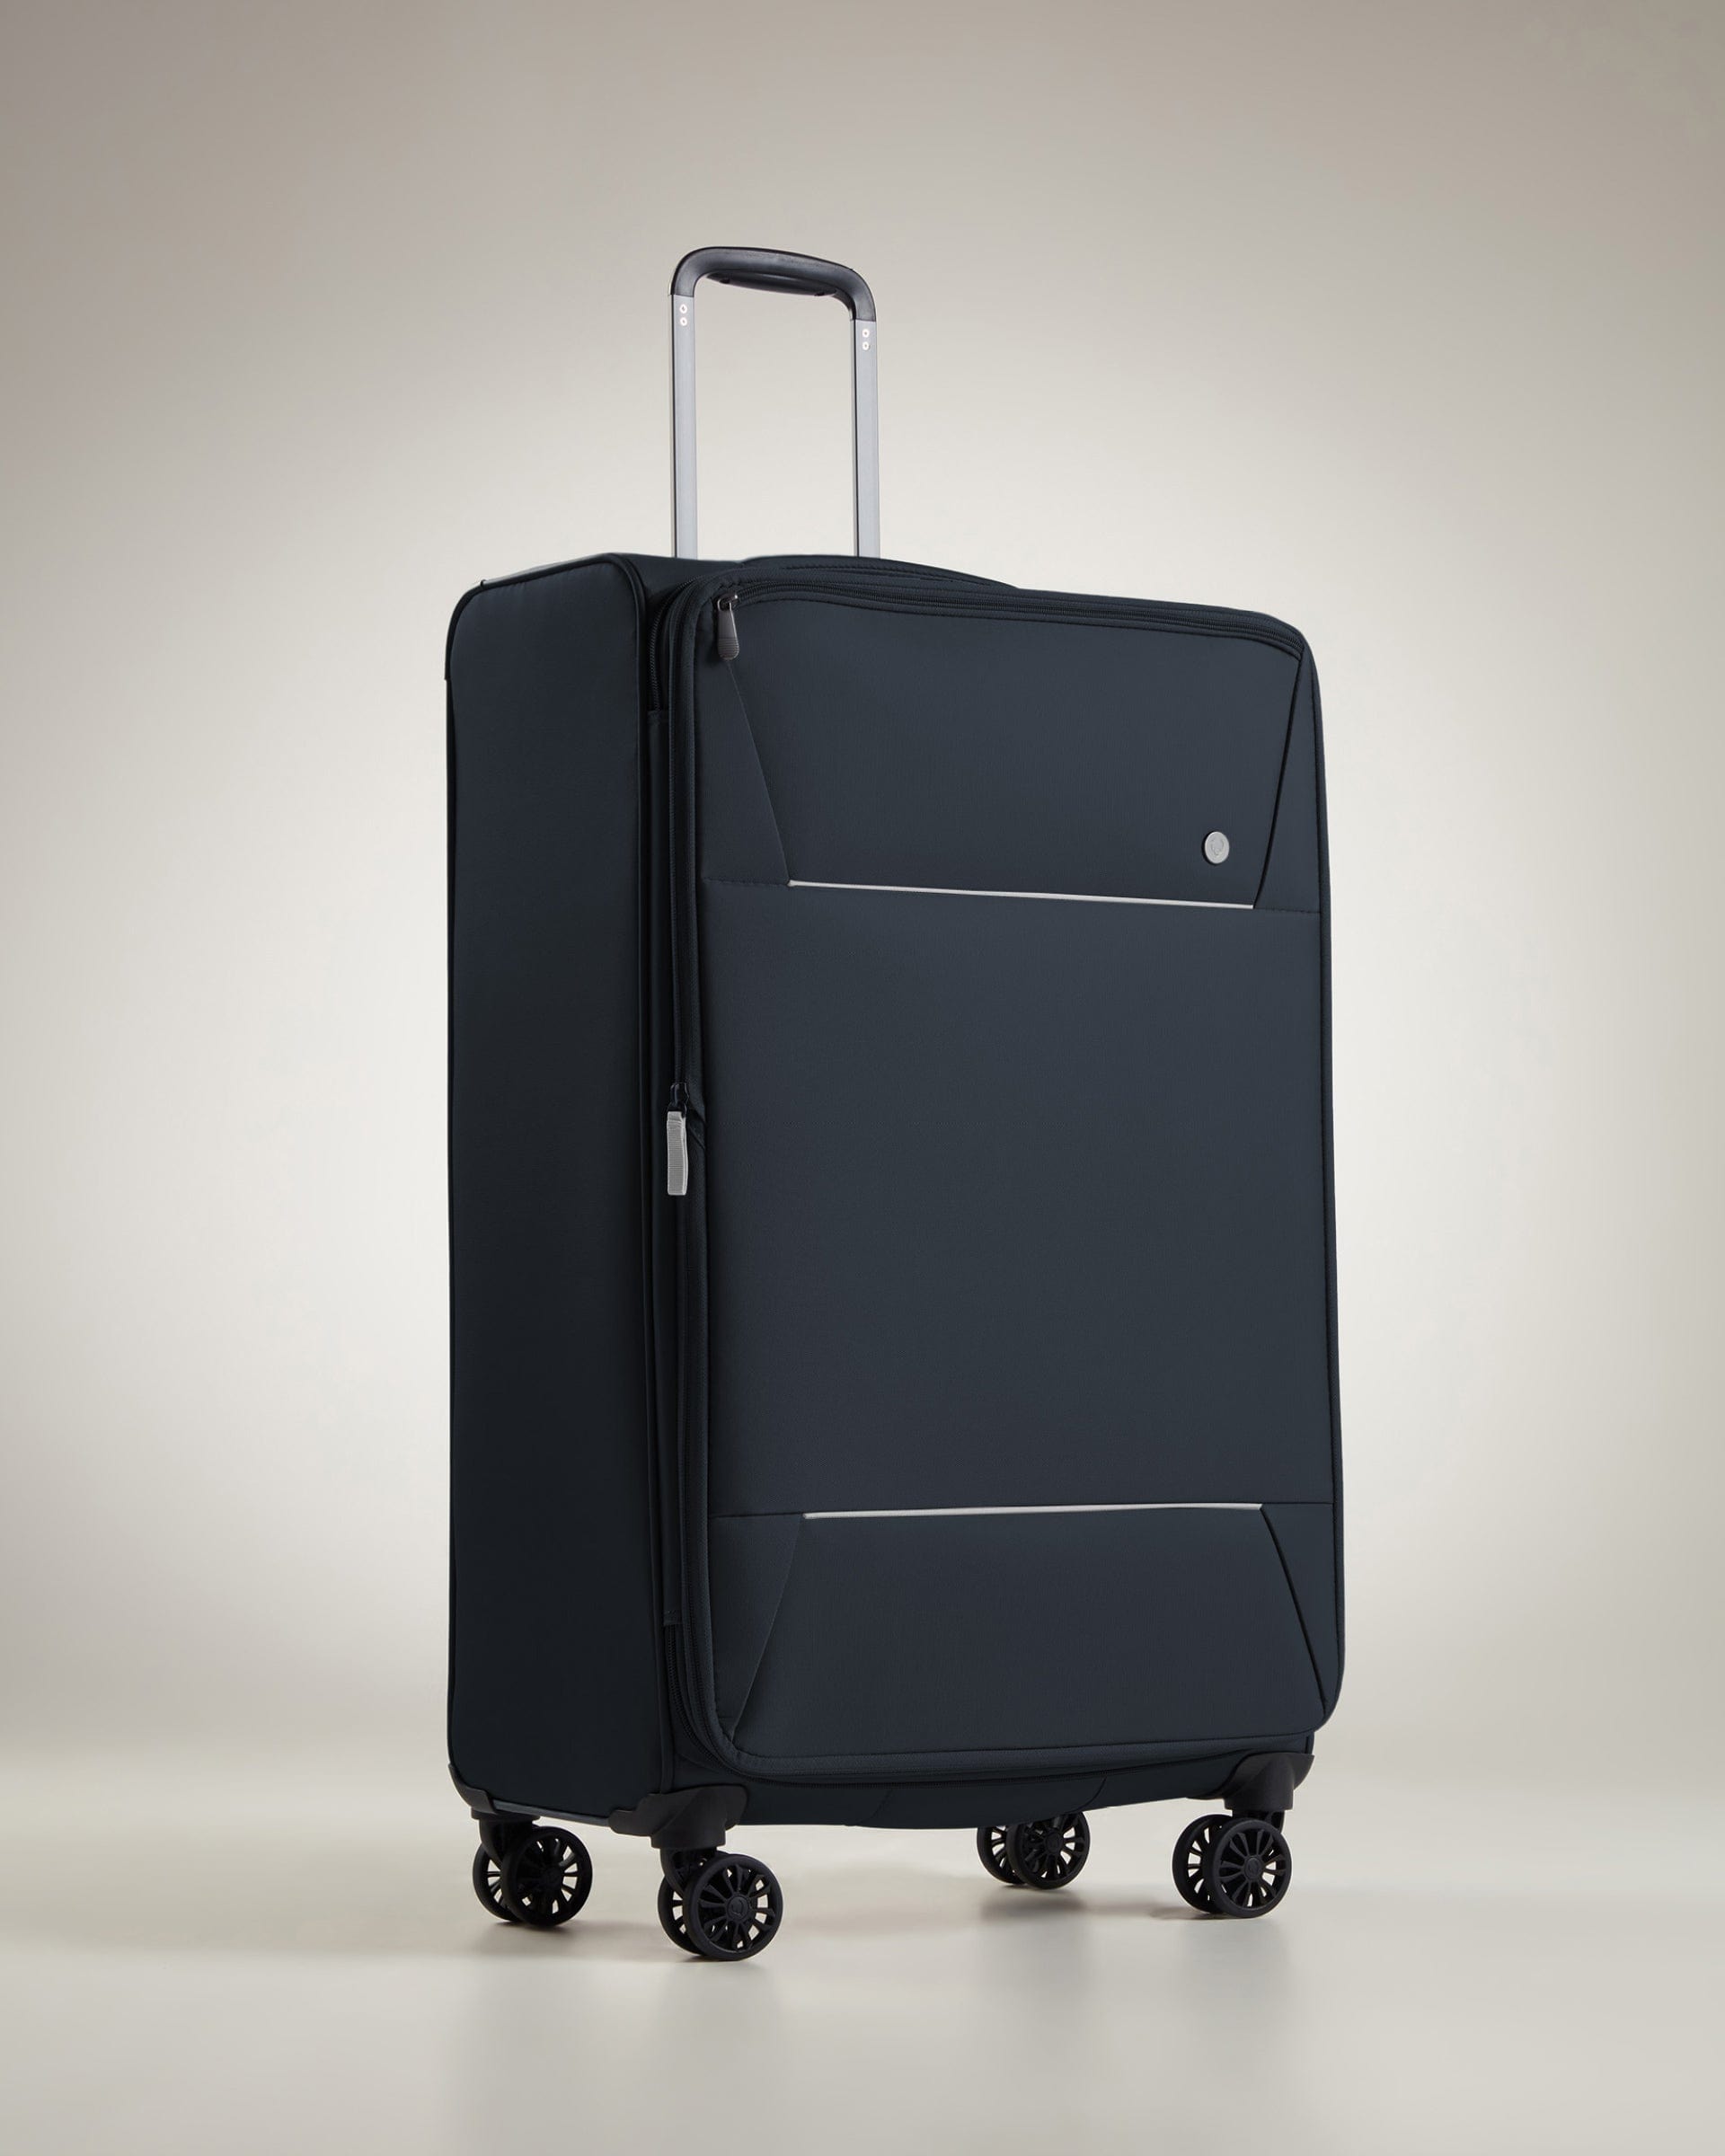 View Antler Brixham Large Suitcase In Navy Size 31cm x 465cm x 81cm information